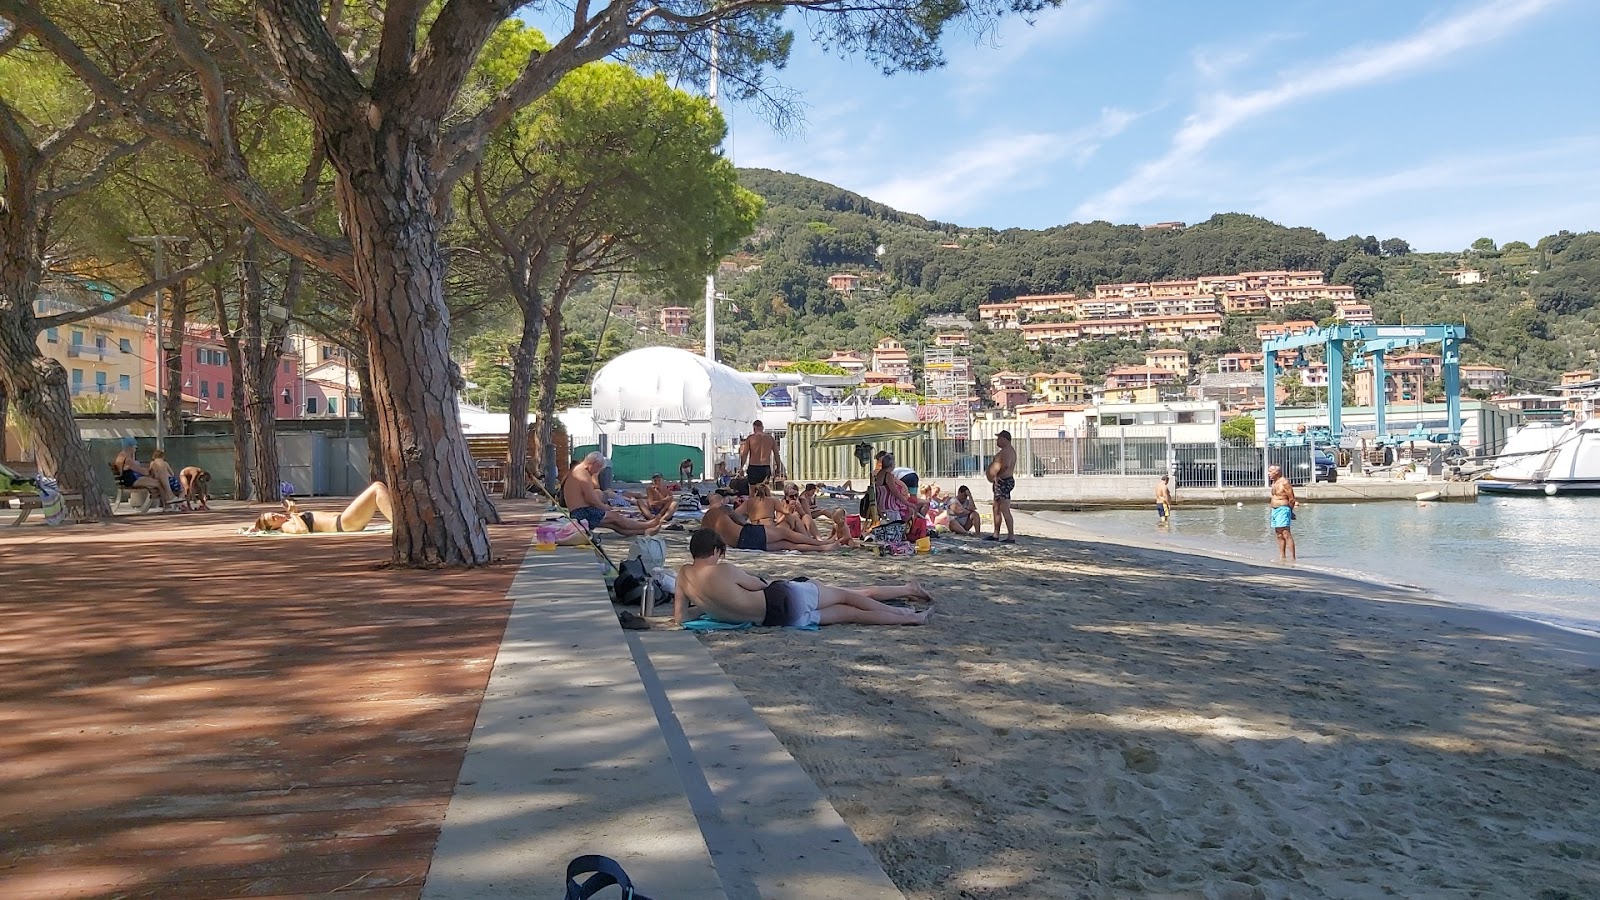 Foto van Spiaggia Giardini Pubblici met hoog niveau van netheid